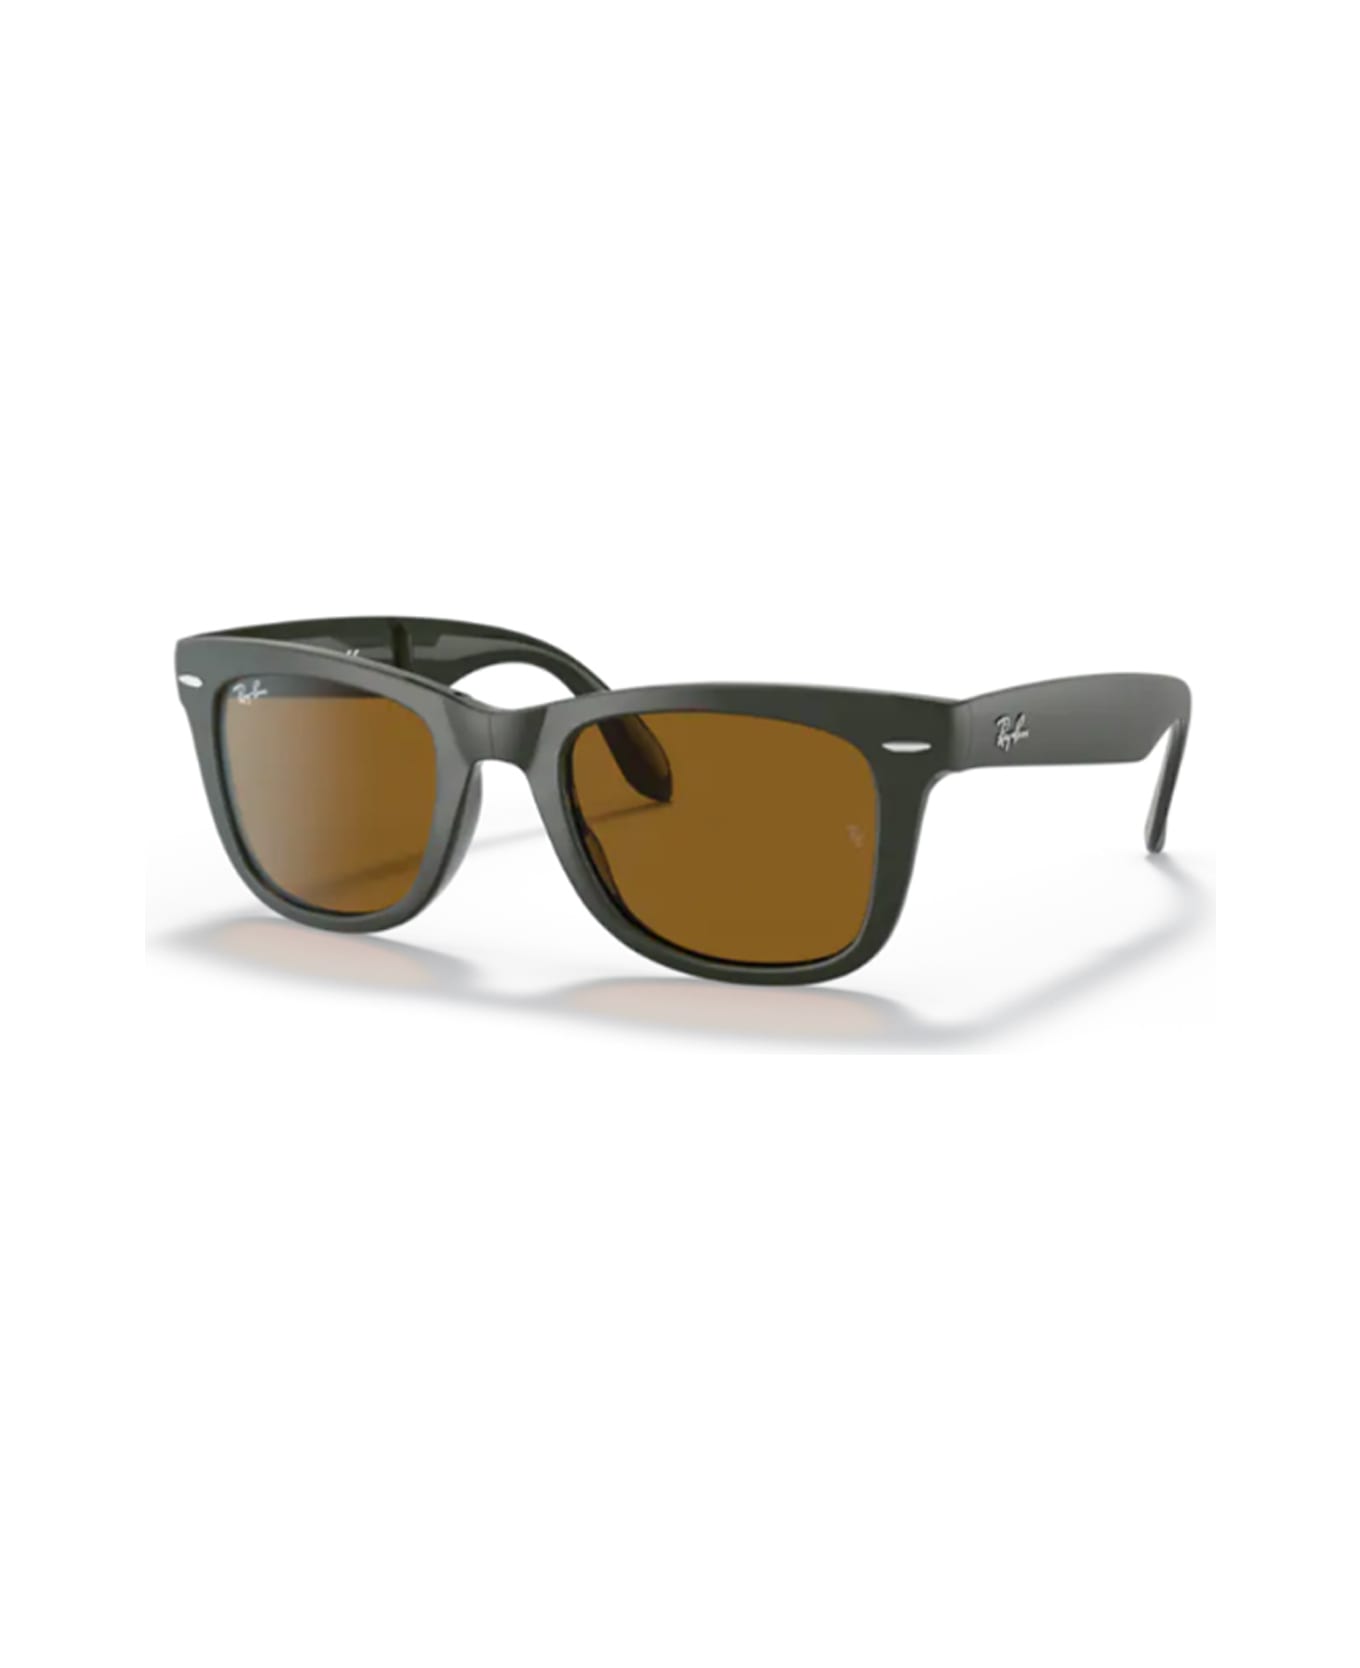 Ray-Ban Folding Wayfarer Rb4105 Sunglasses - Verde サングラス